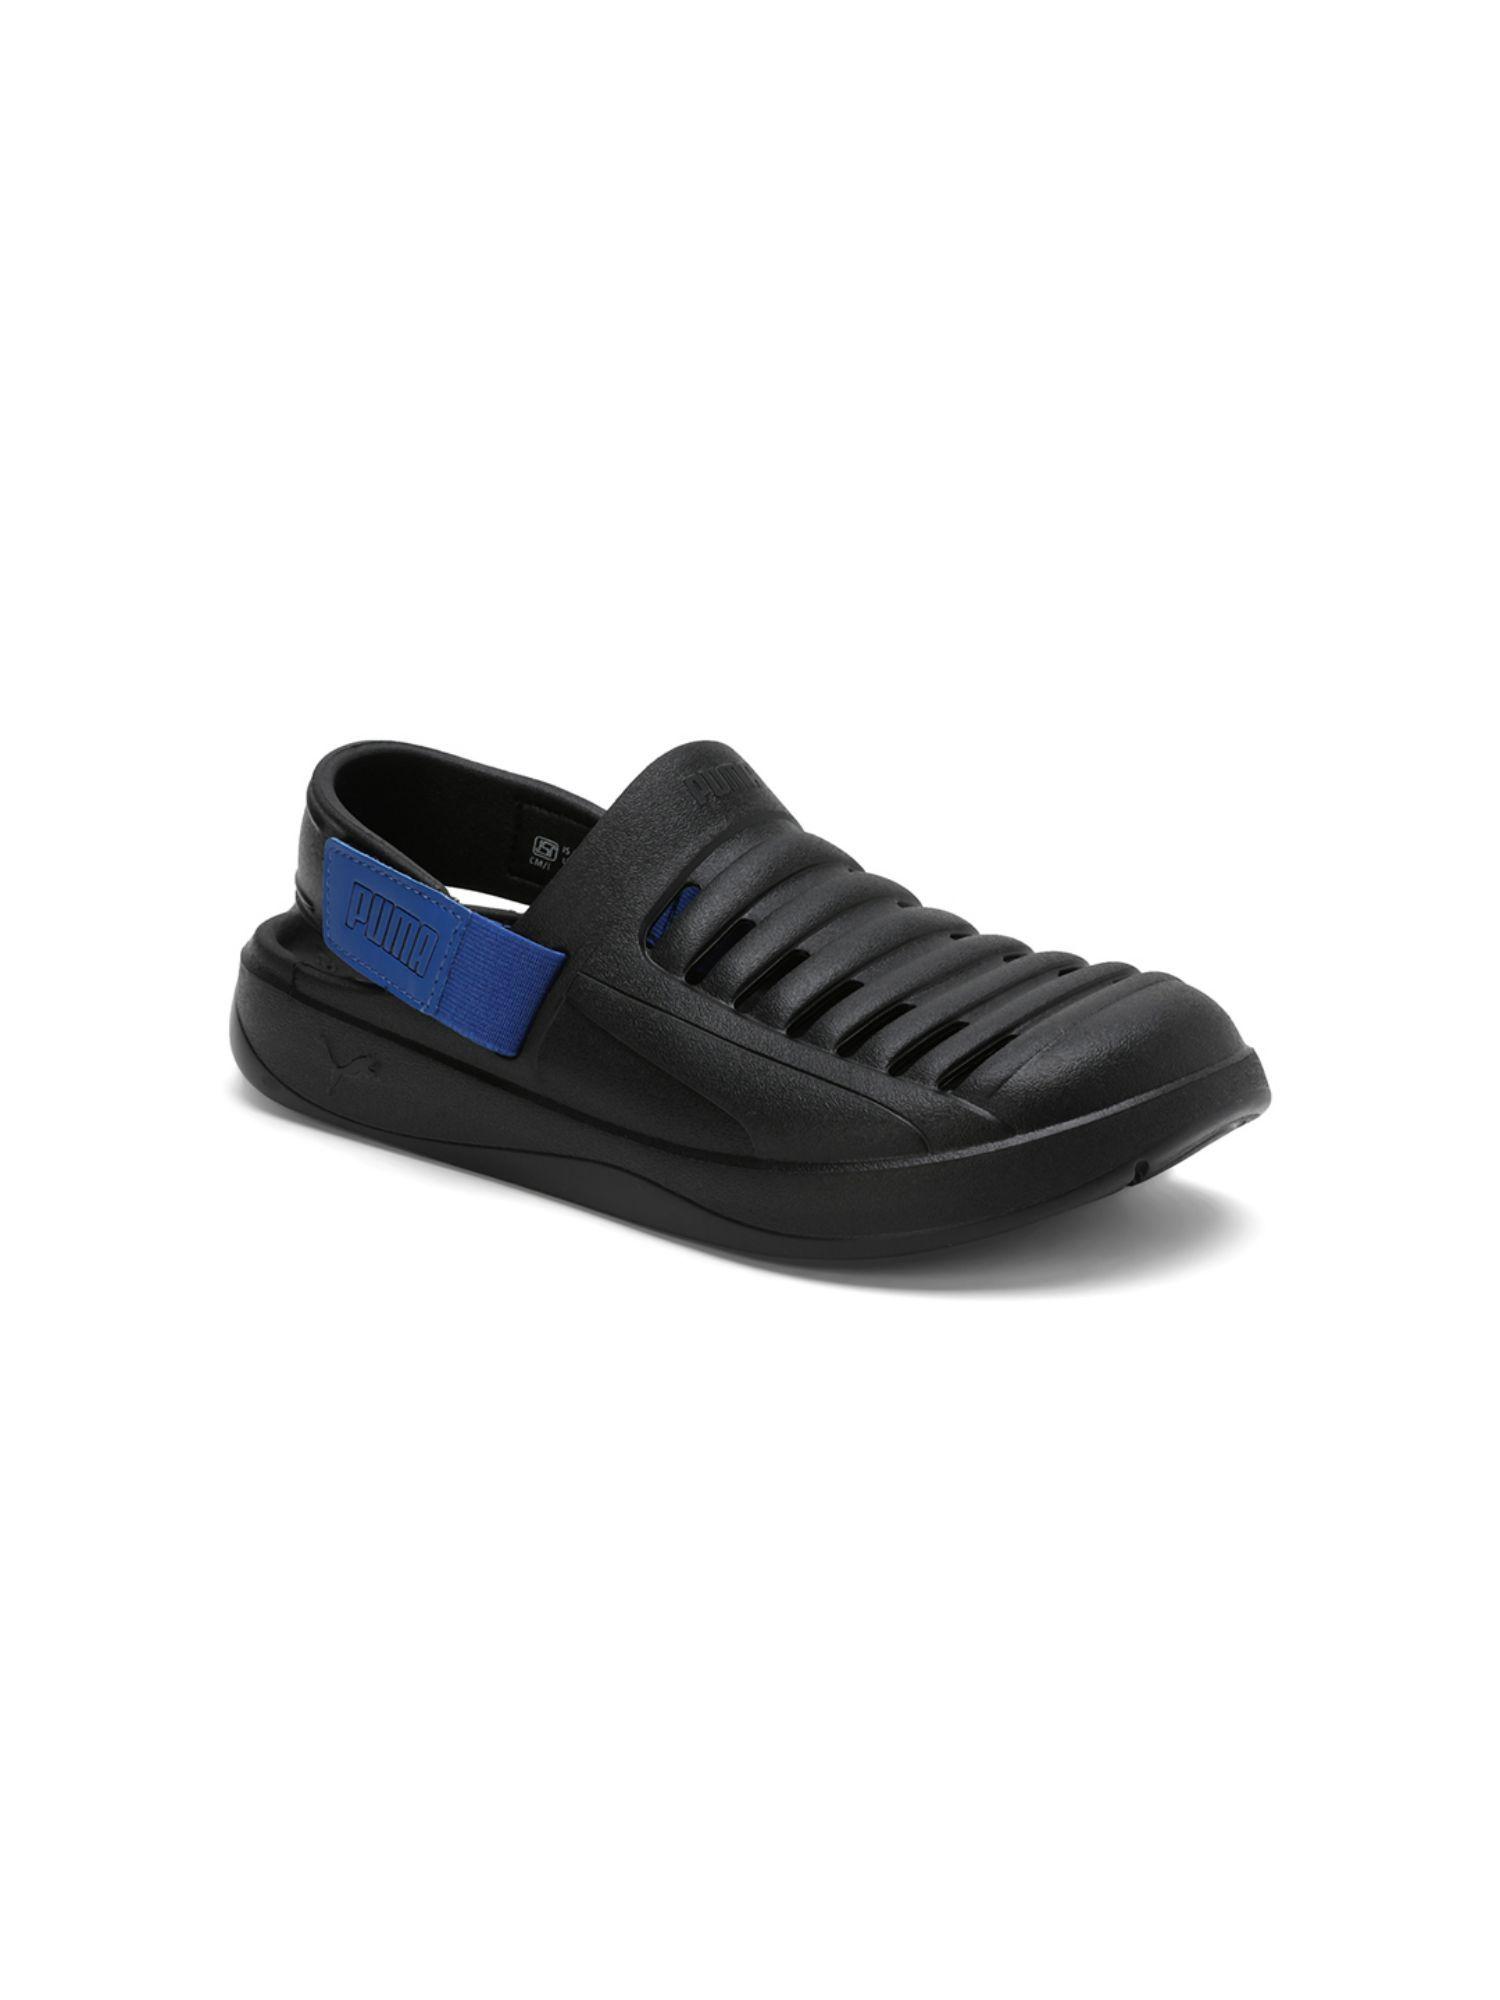 clogs jr kids black sandal